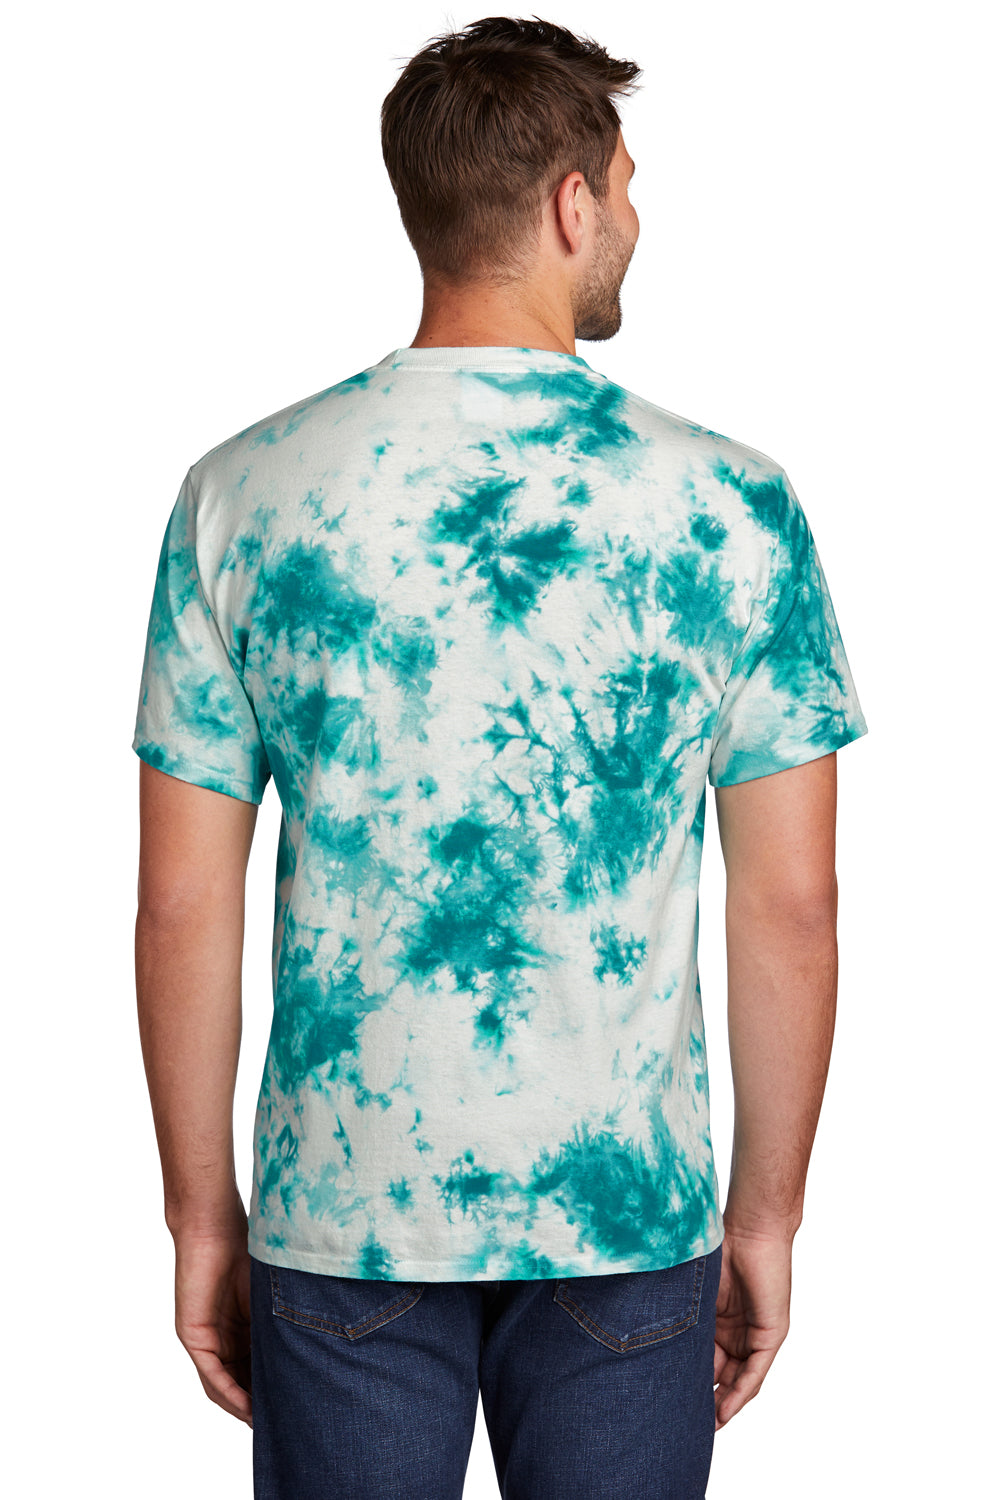 Port & Company Mens Crystal Tie-Dye Short Sleeve Crewneck T-Shirt Teal Blue Side